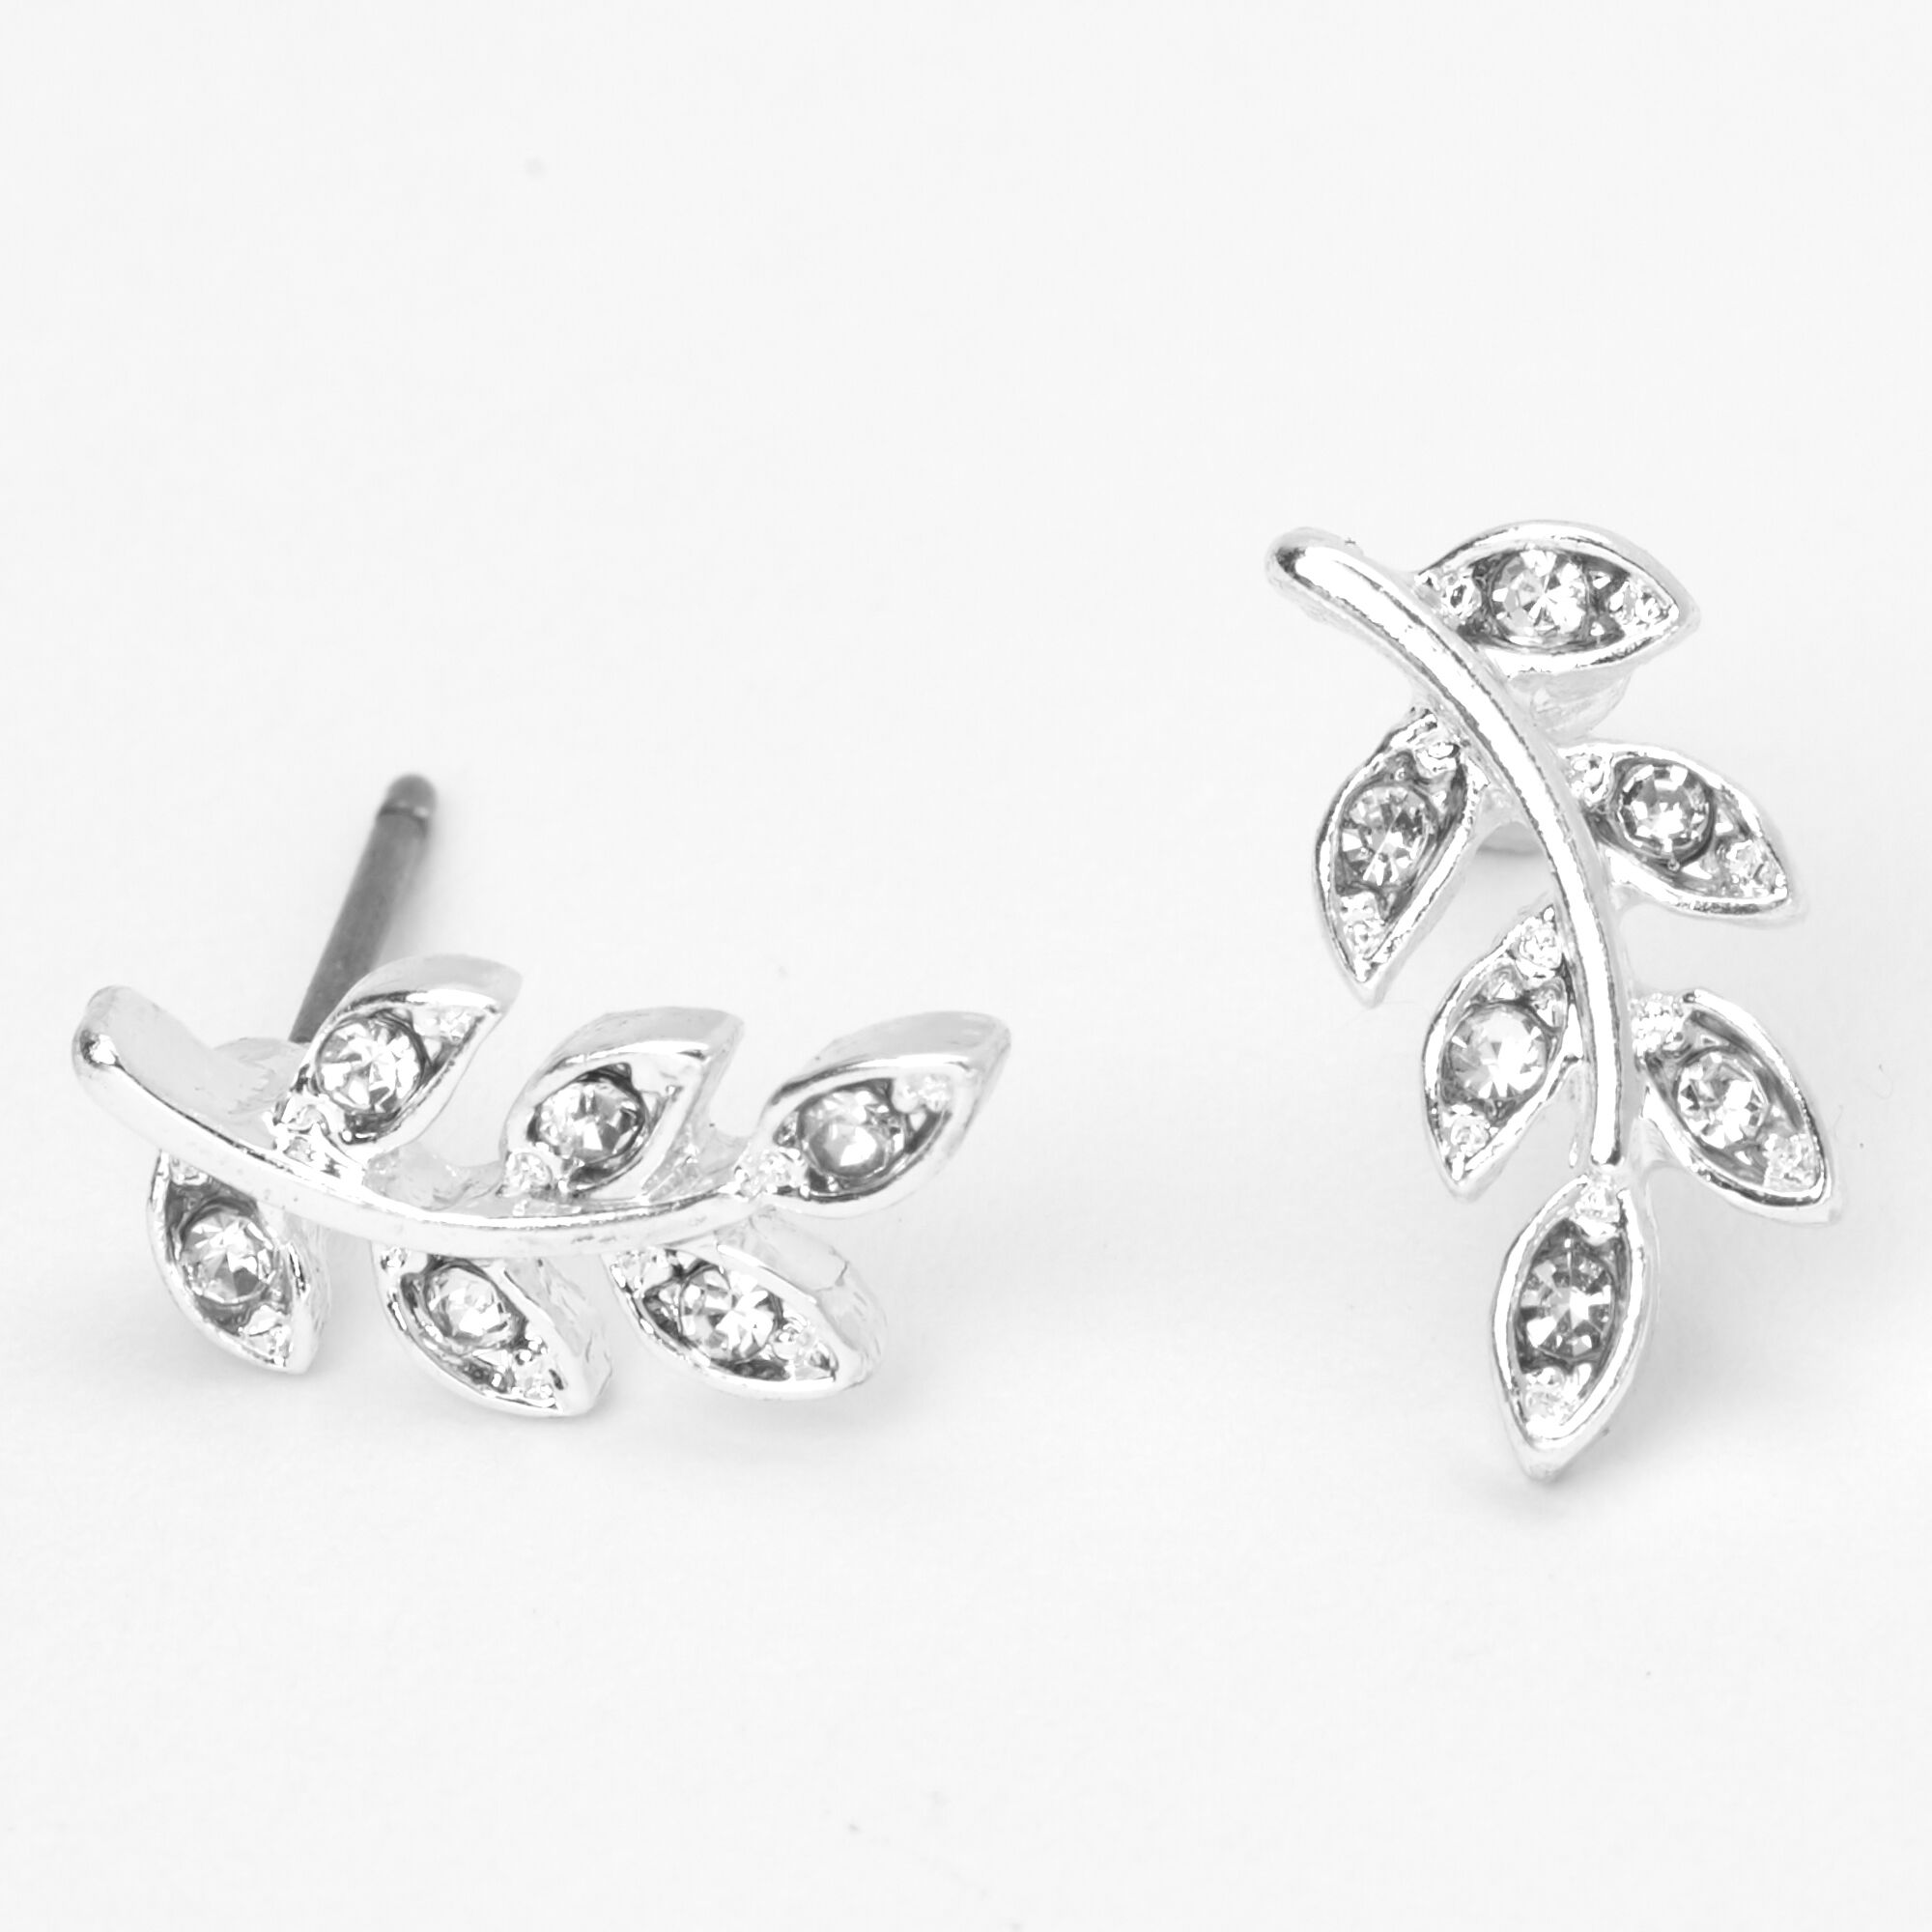 Buy Silver Leaf Earrings Forest Jewellery Leaf Jewellery Oxidized Online in  India  Etsy